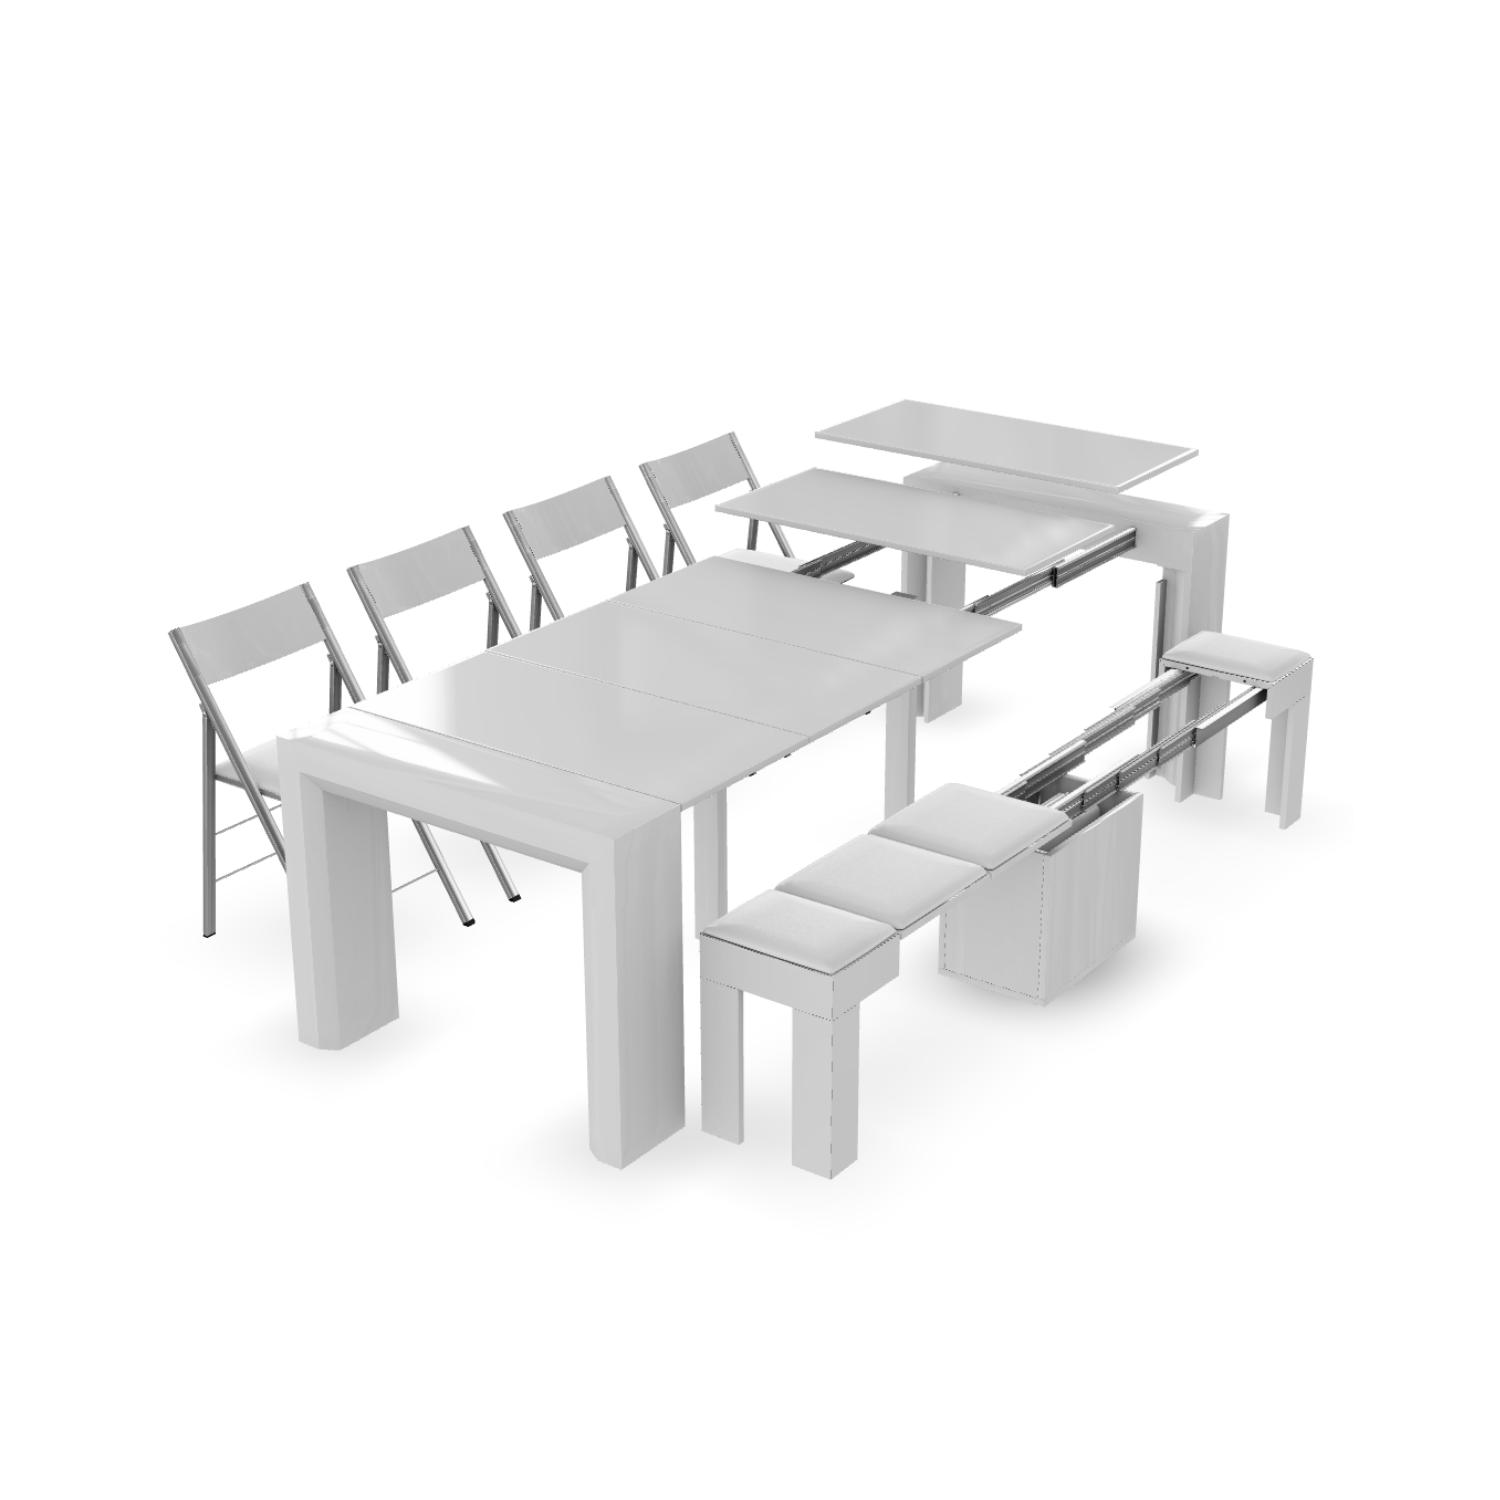 Space Saving Folding Table - Vengiò model - New Table Concept